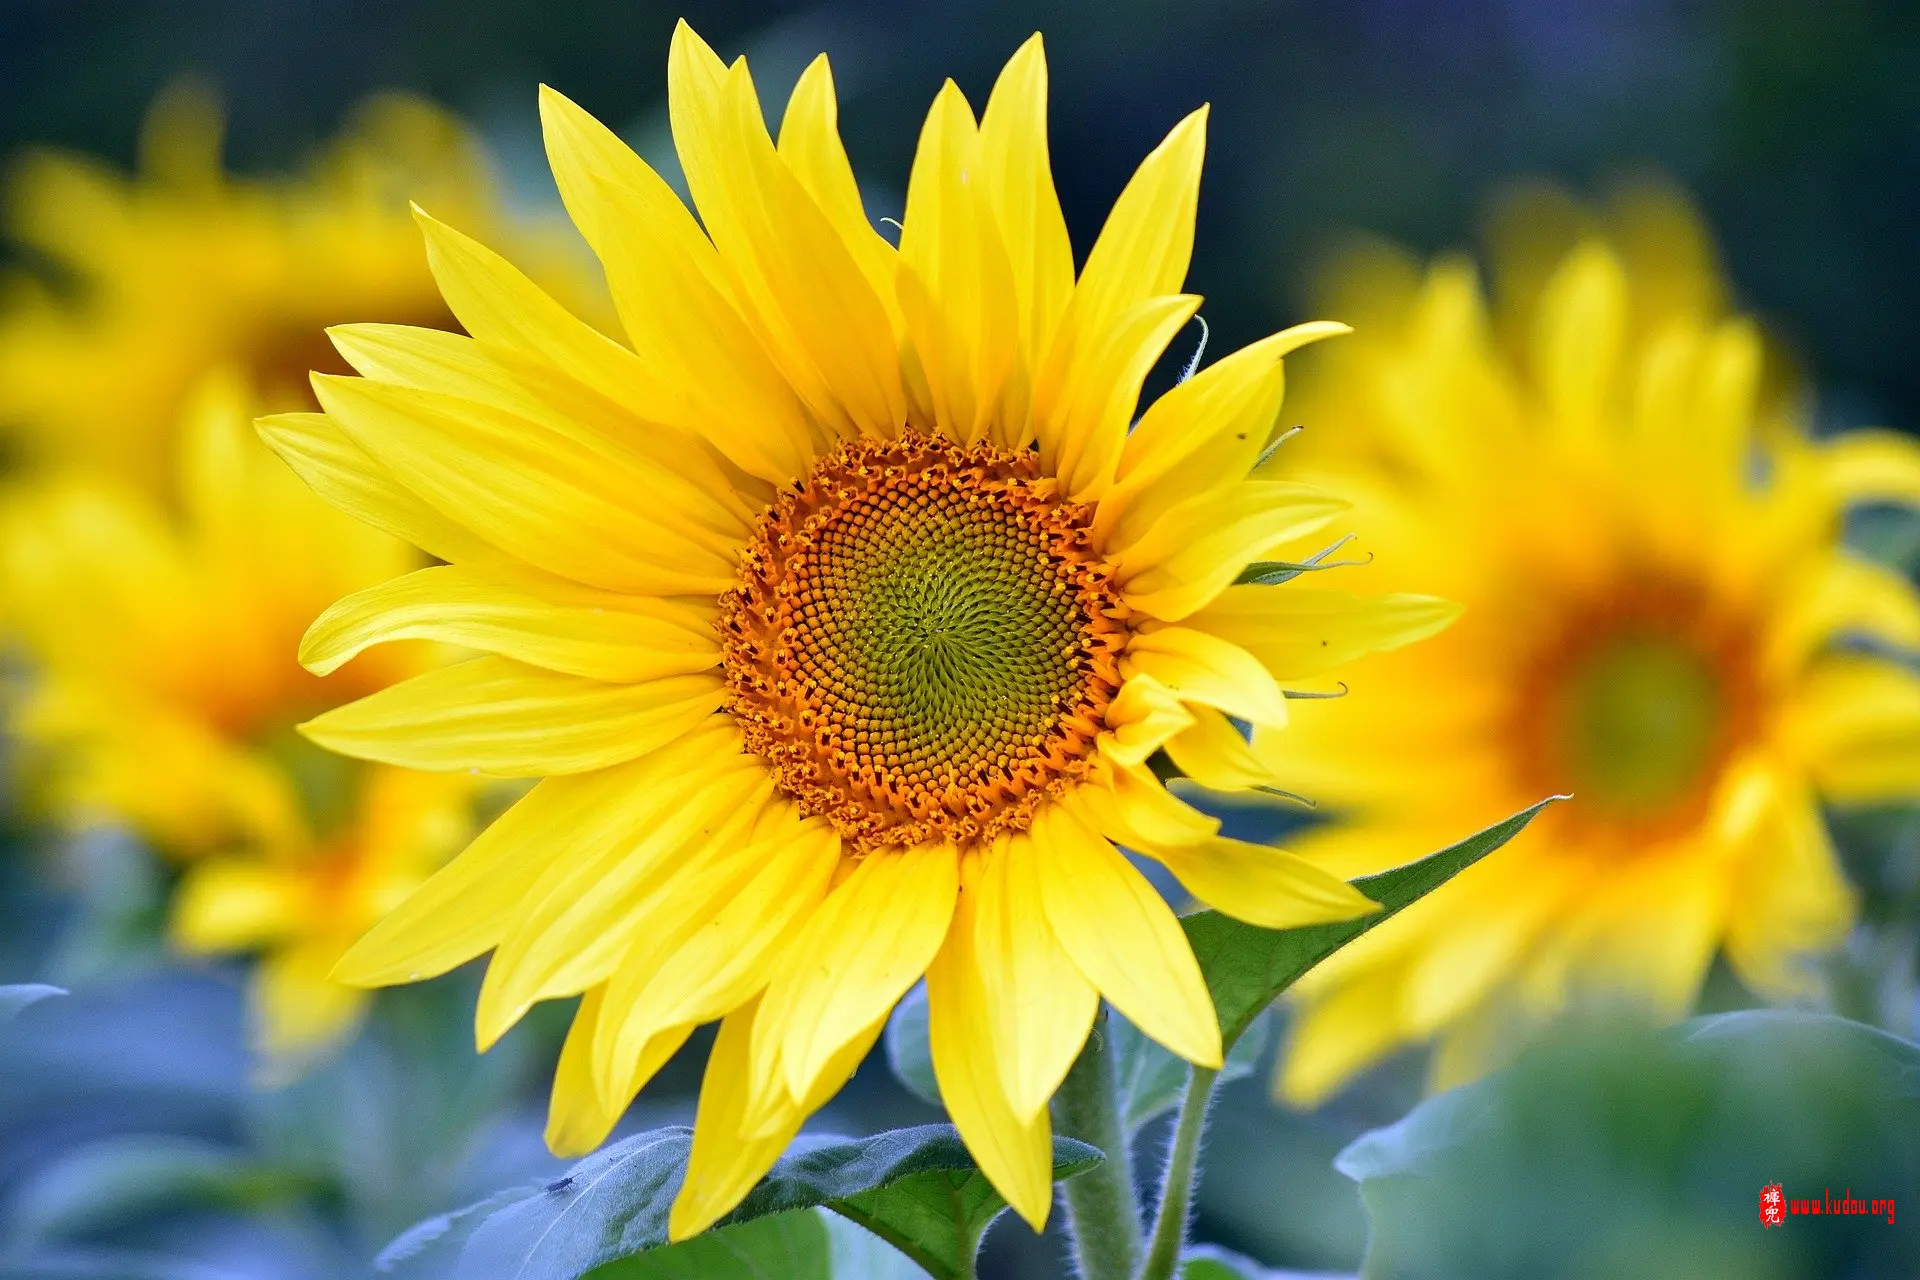 sunflowers-8351807_1920.jpg